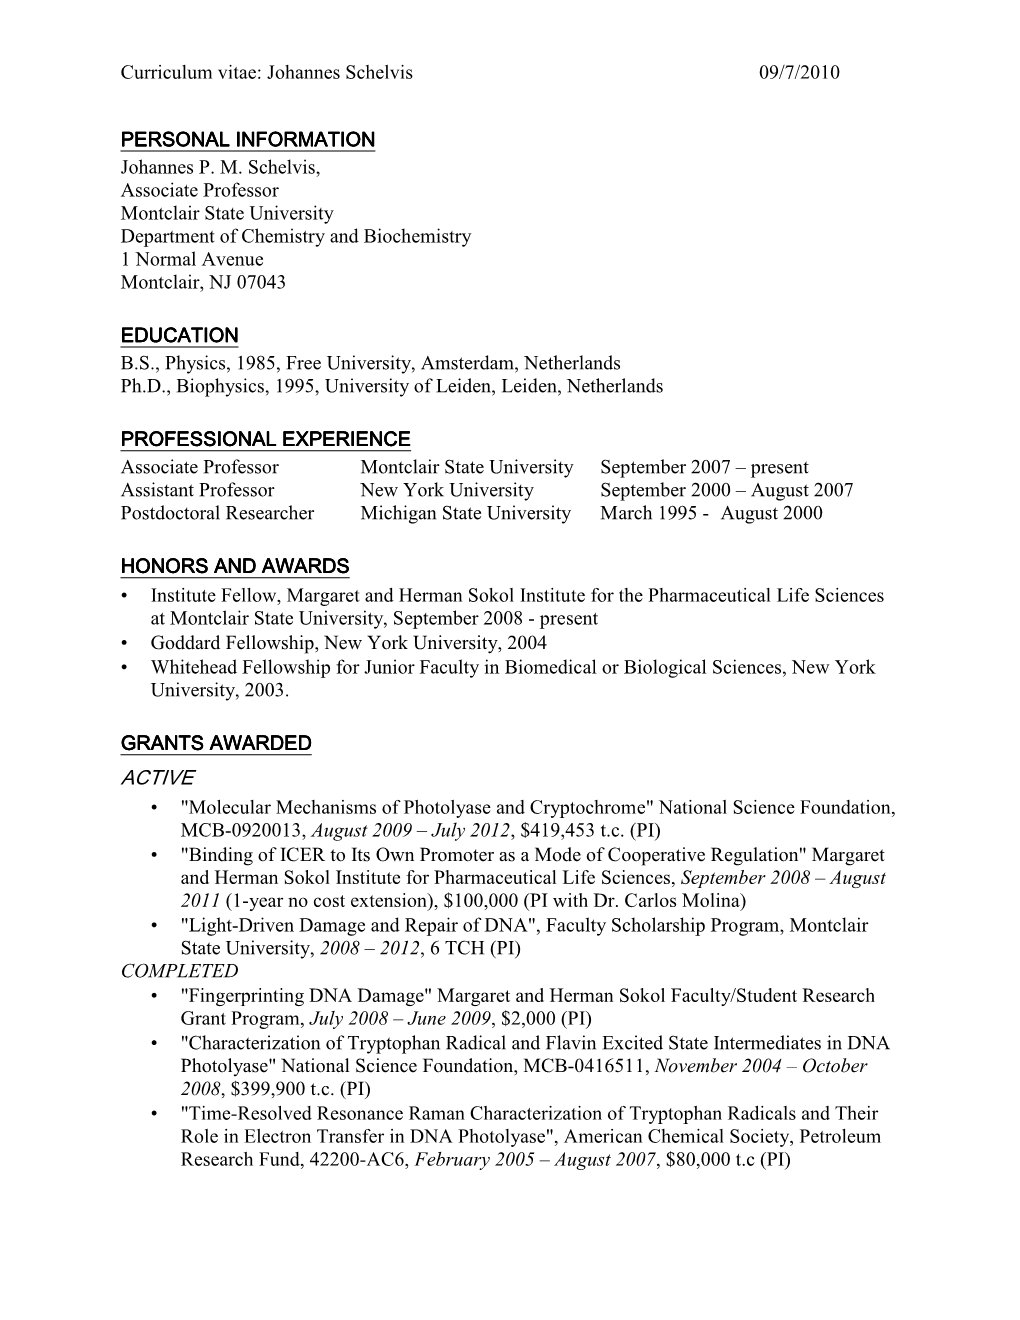 SCHELVIS CV Profile 2010